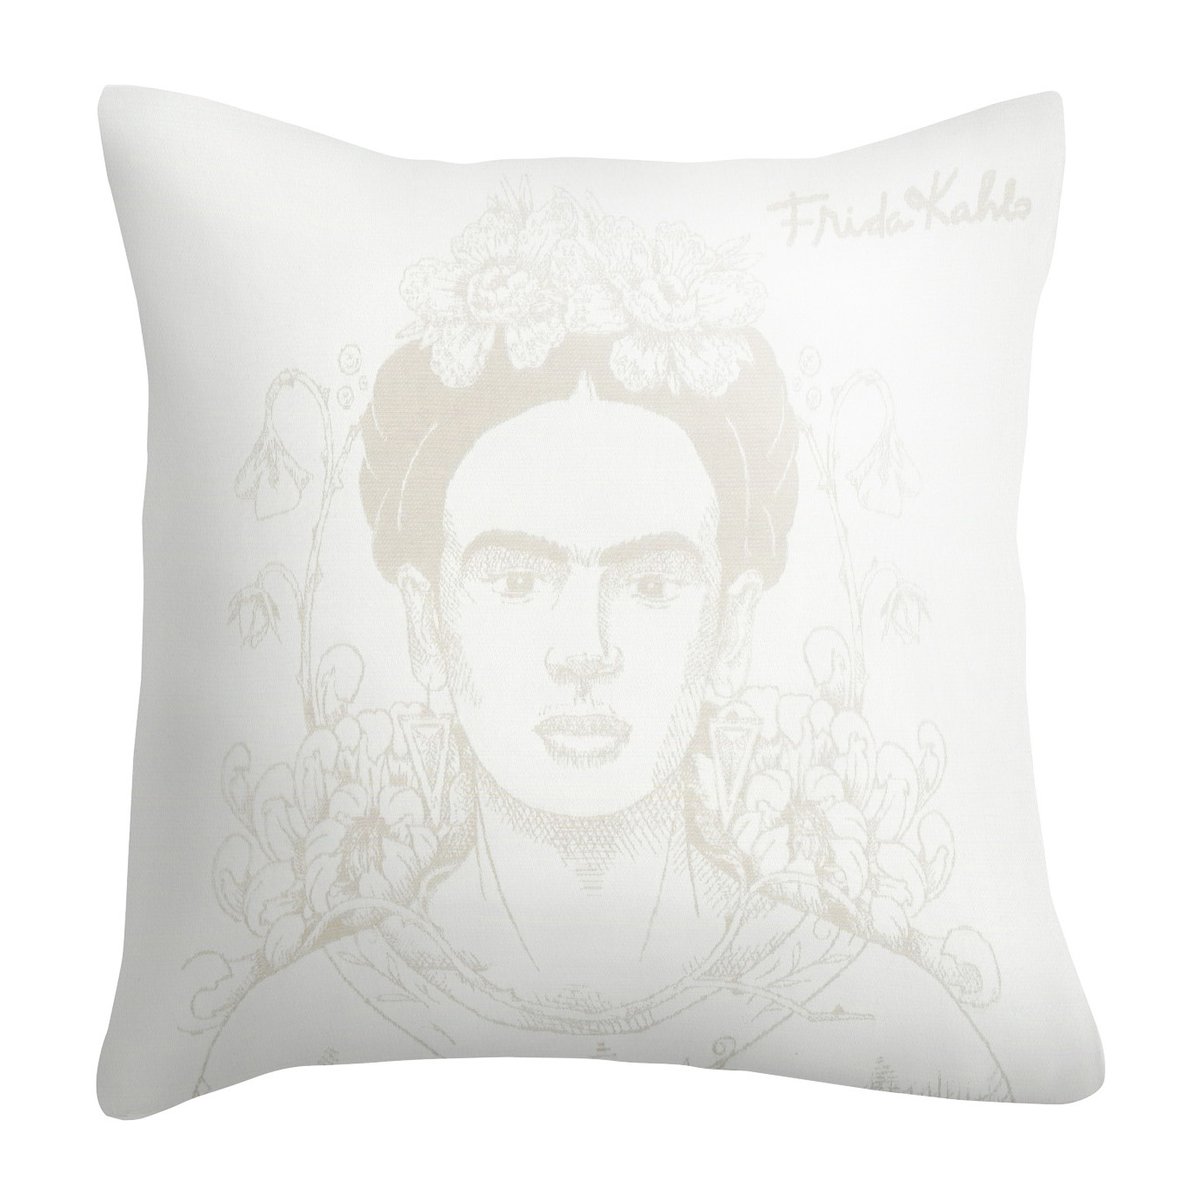 Bilde av Ekelund Linneväveri Frida Kahlo putevar 40 x 40 cm Belleza